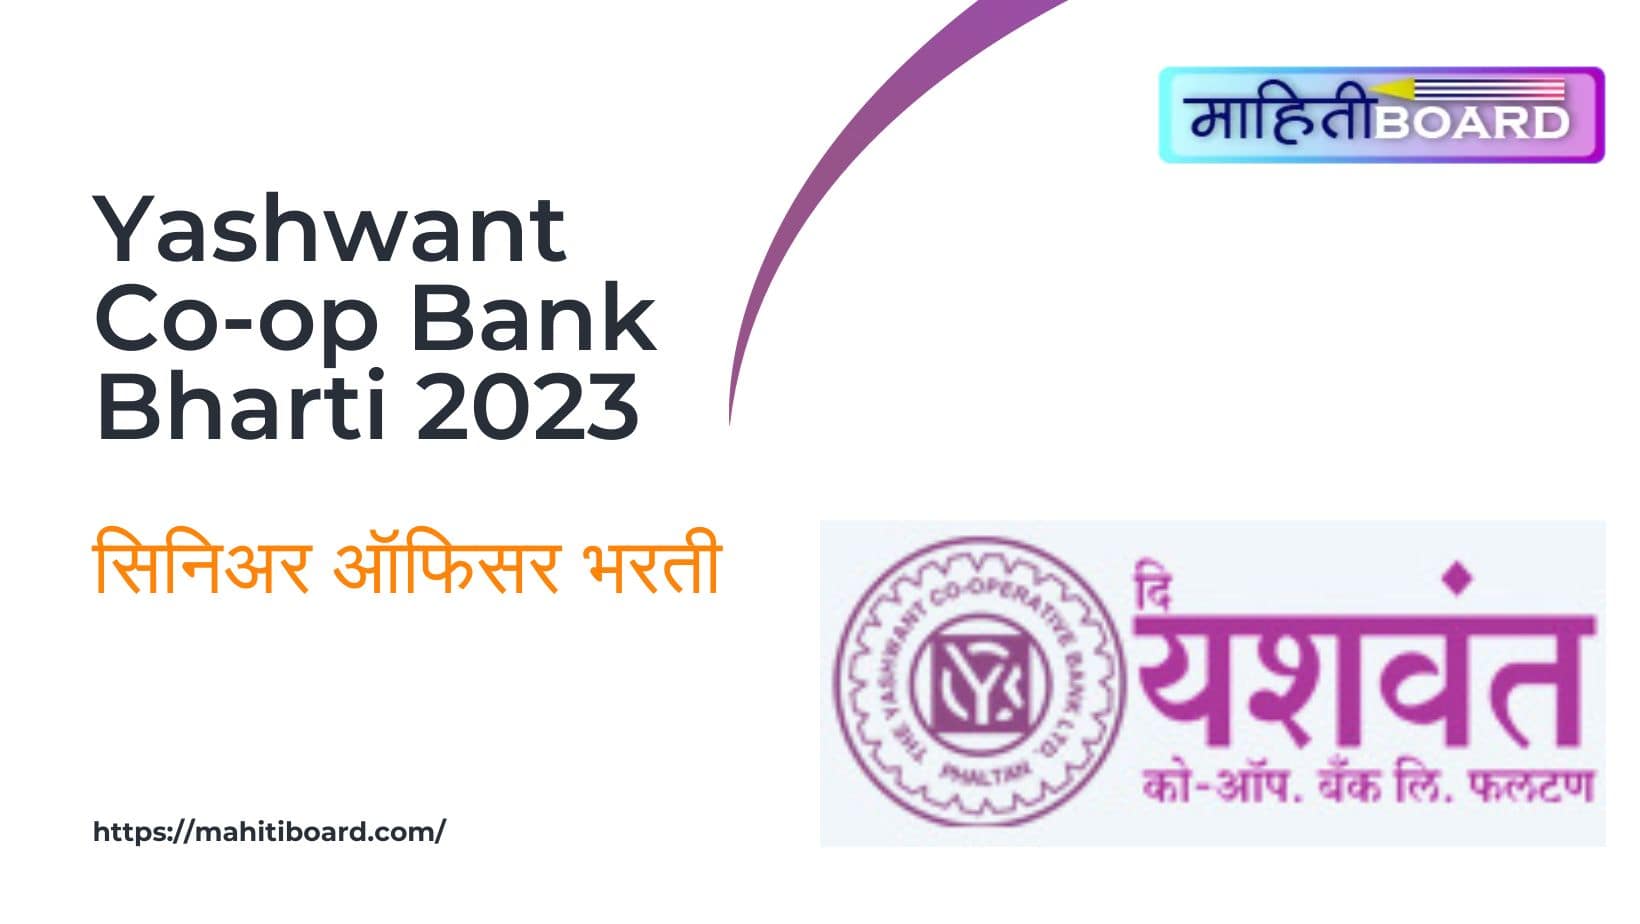 Yashwant Co-op Bank Bharti 2023